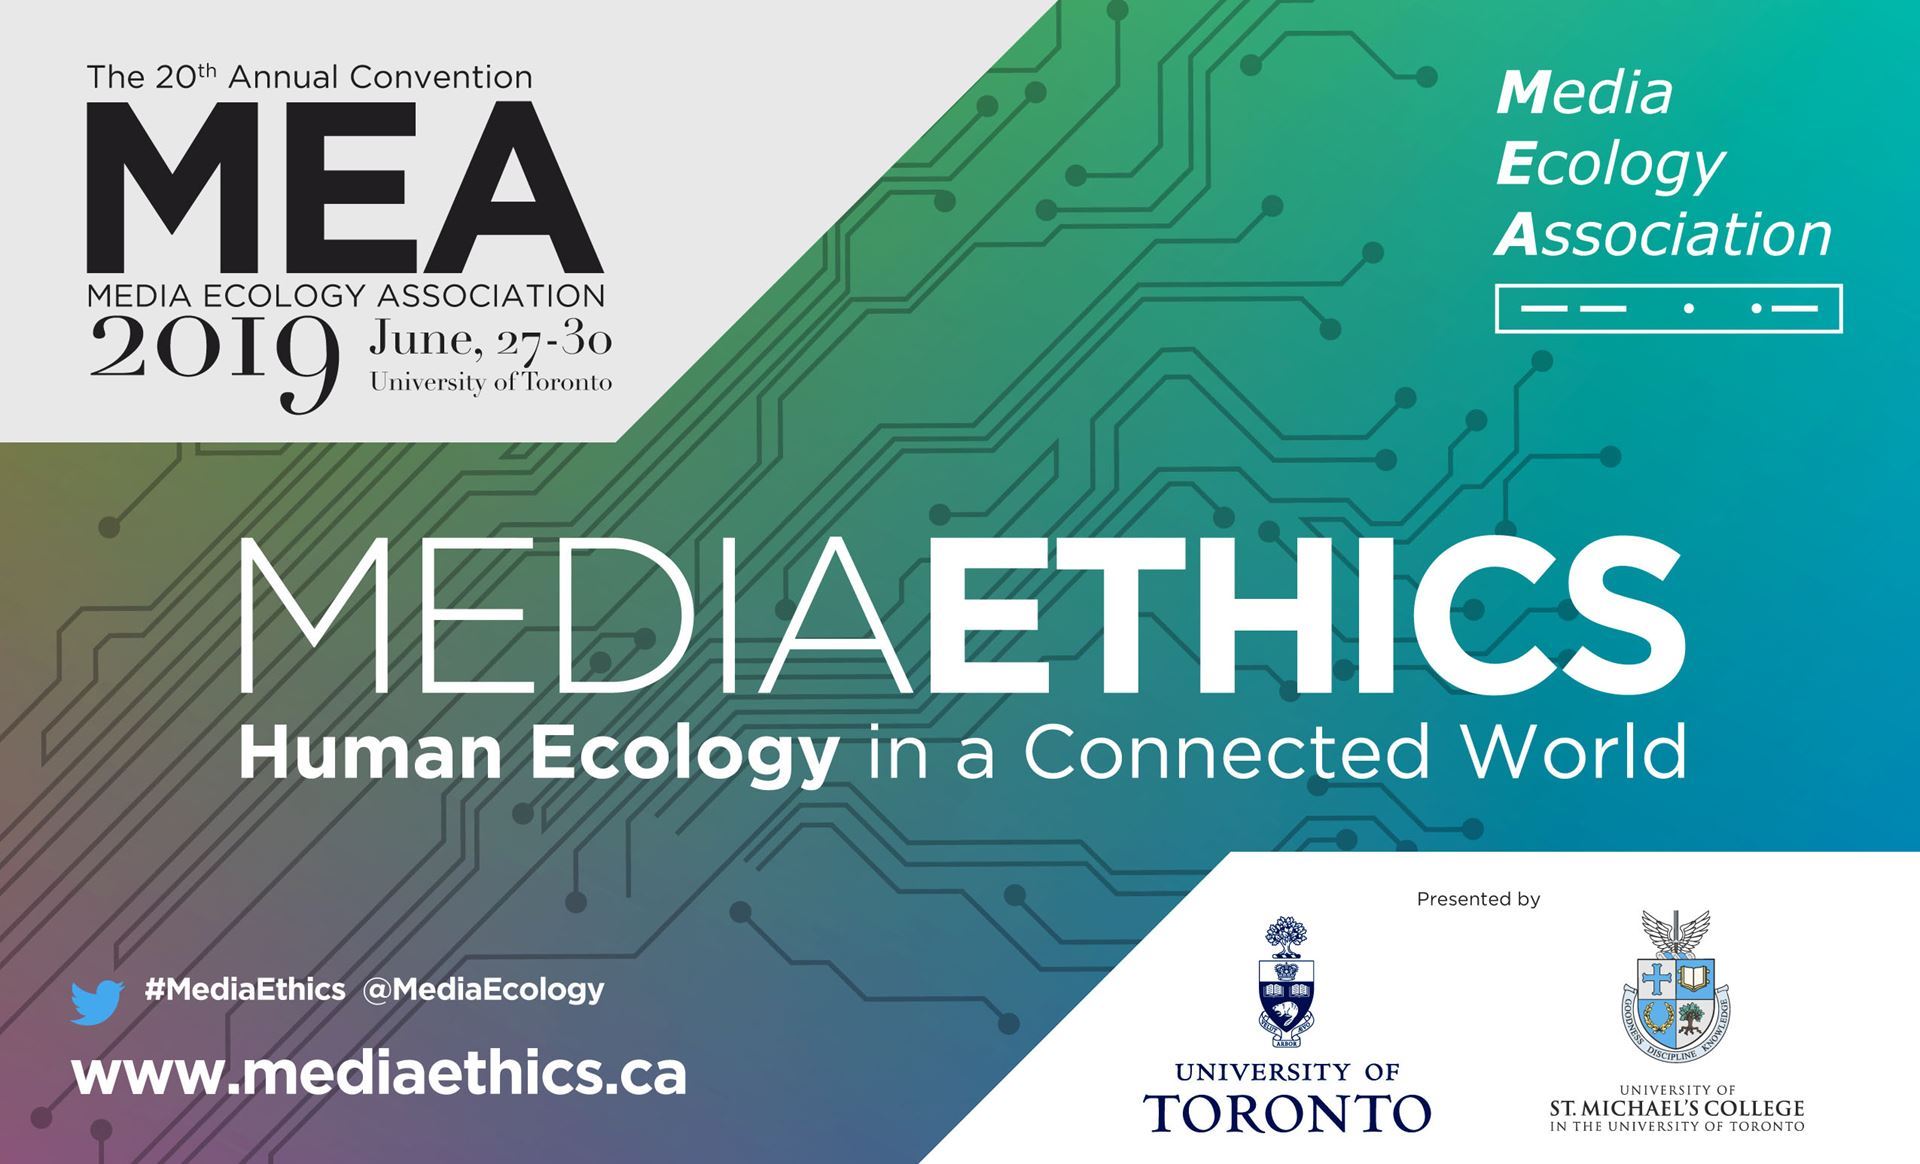 Go to www.mediaethics.ca